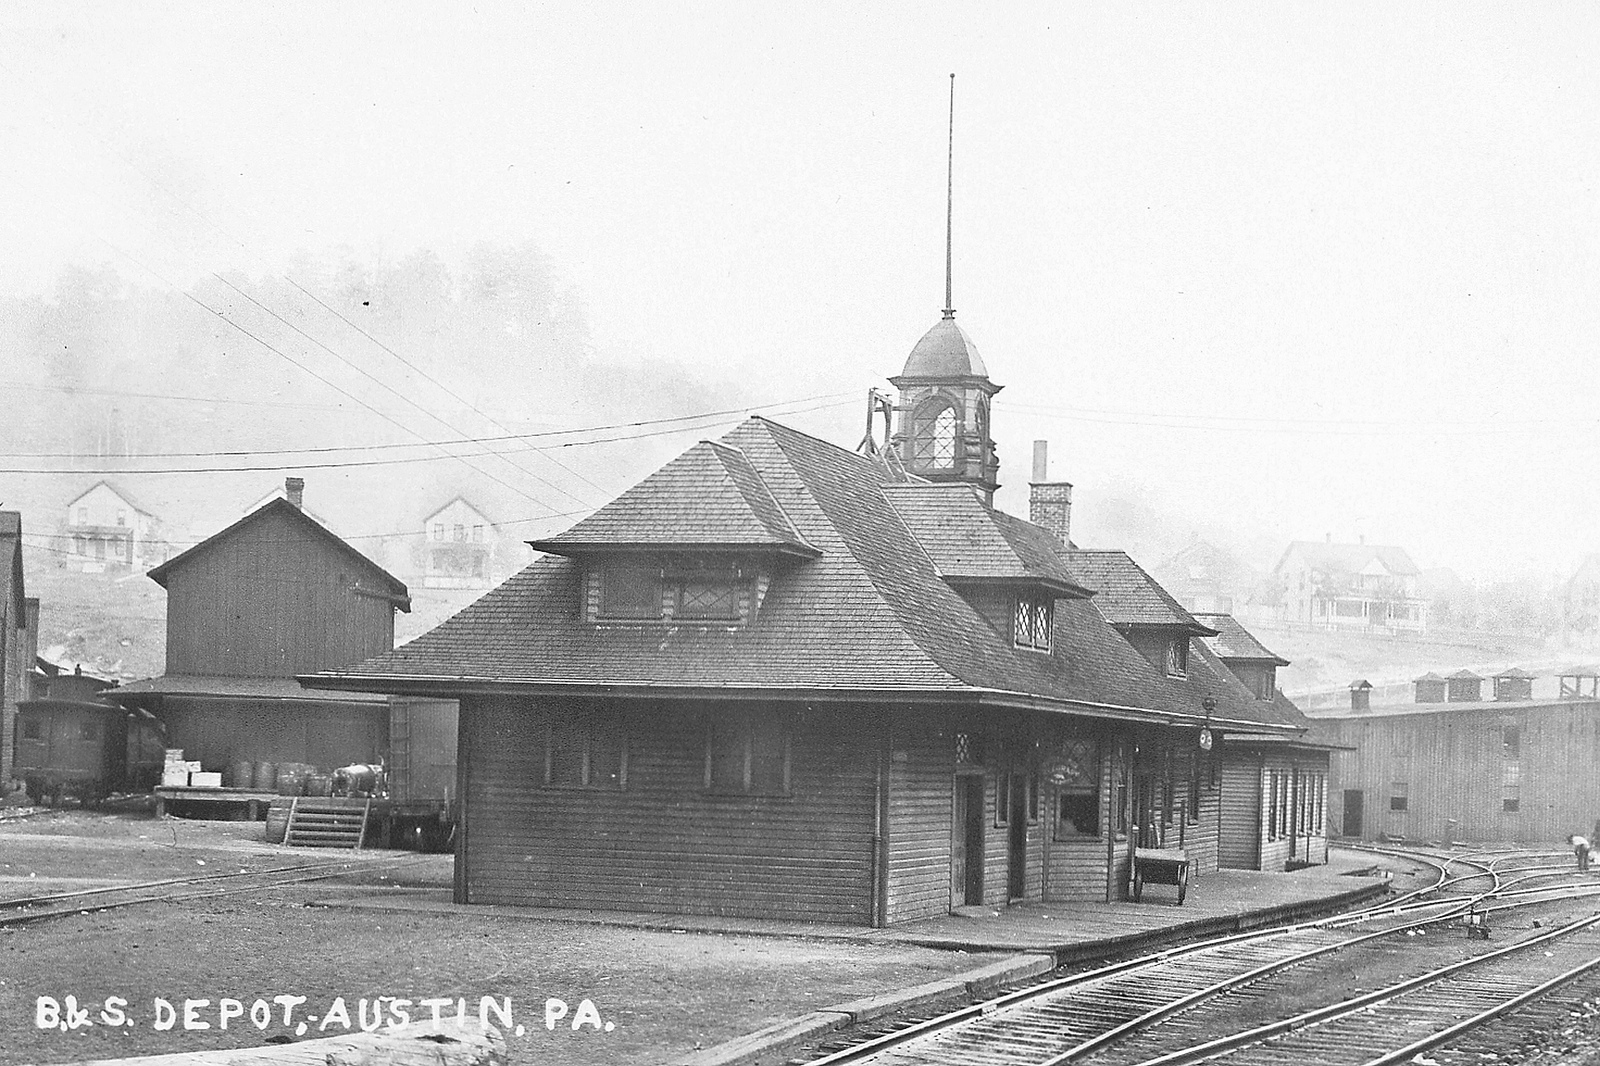 The Buffalo & Susquehanna Railroad depot in Austin, Pa.